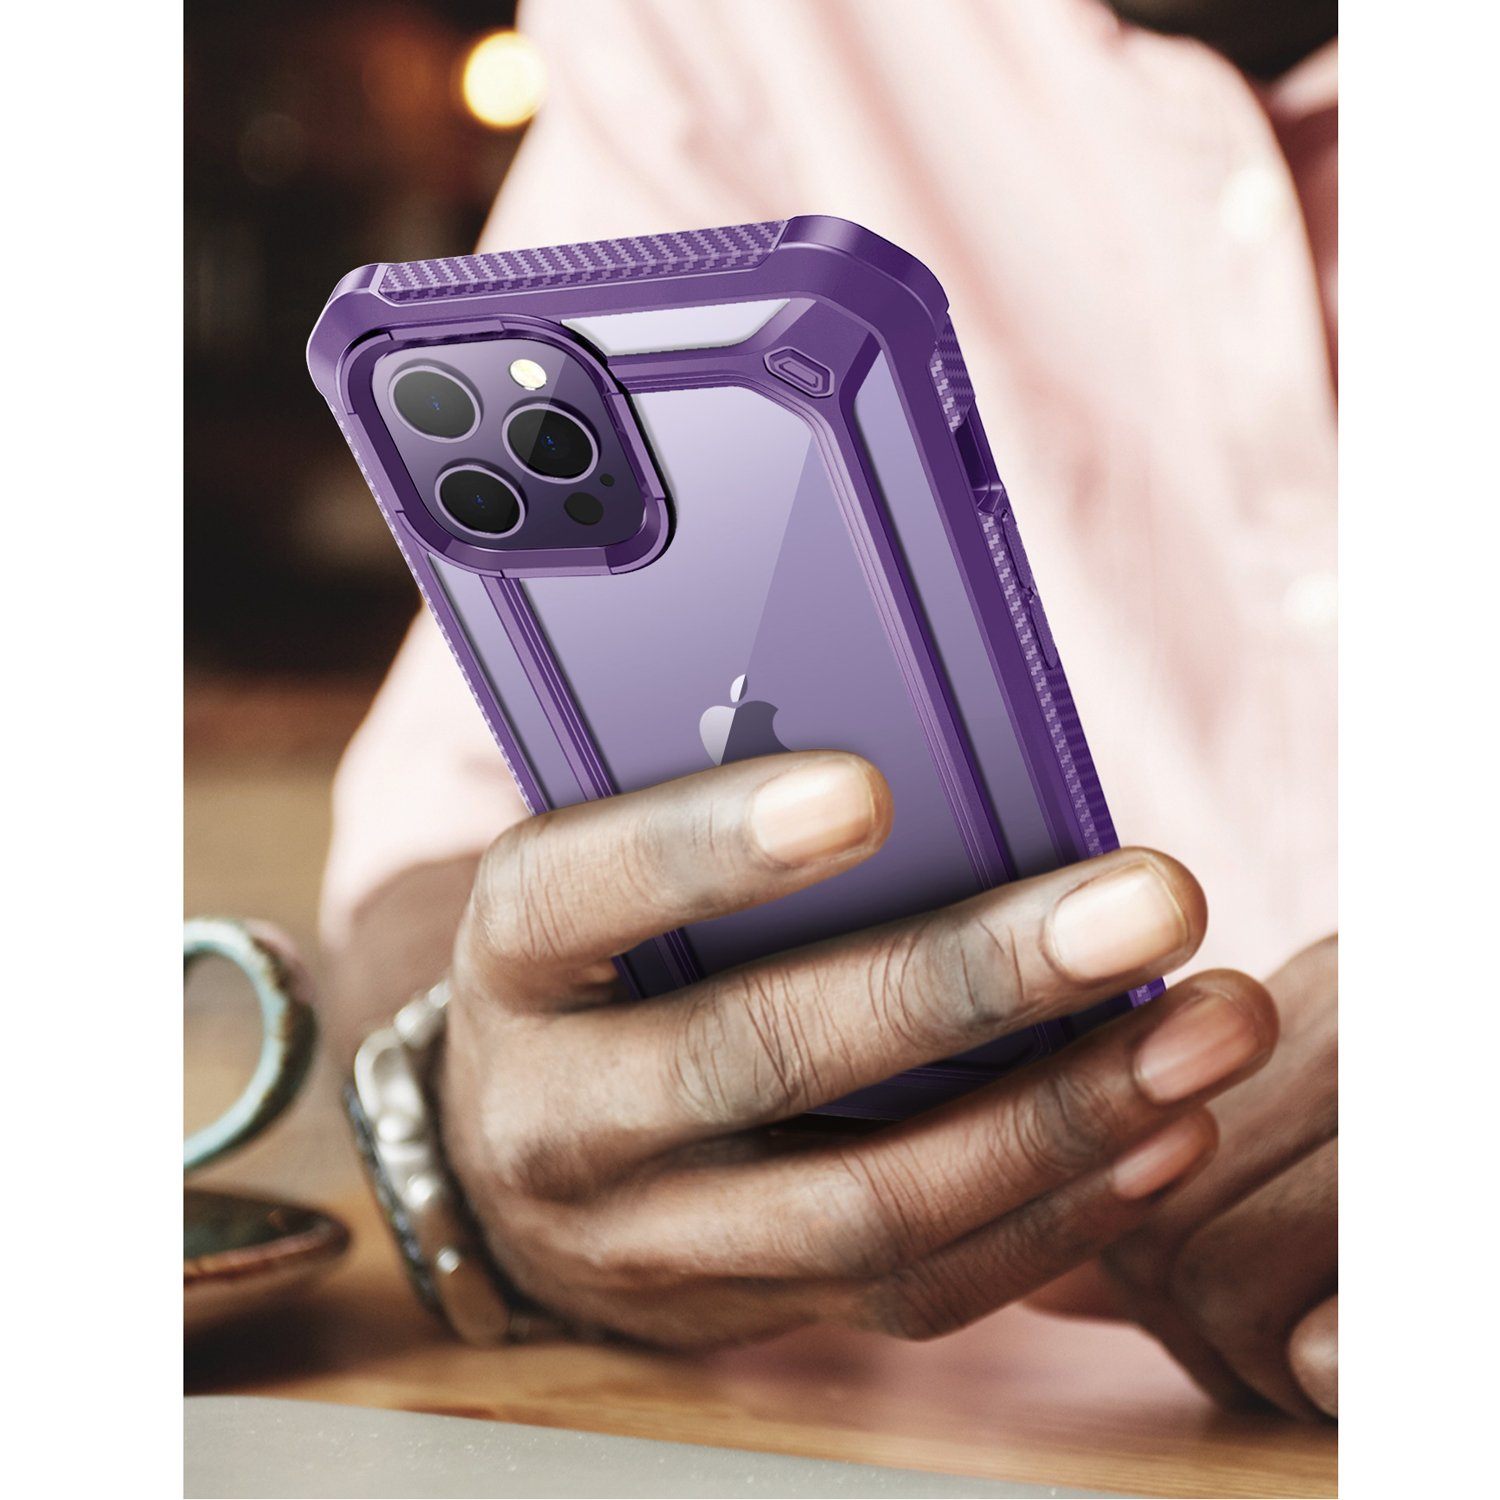 Supcase UB Exo Premium Hybrid Protective Clear Bumper Case for iPhone 12 Pro Max 6.7"(2020), Purple Default Supcase 